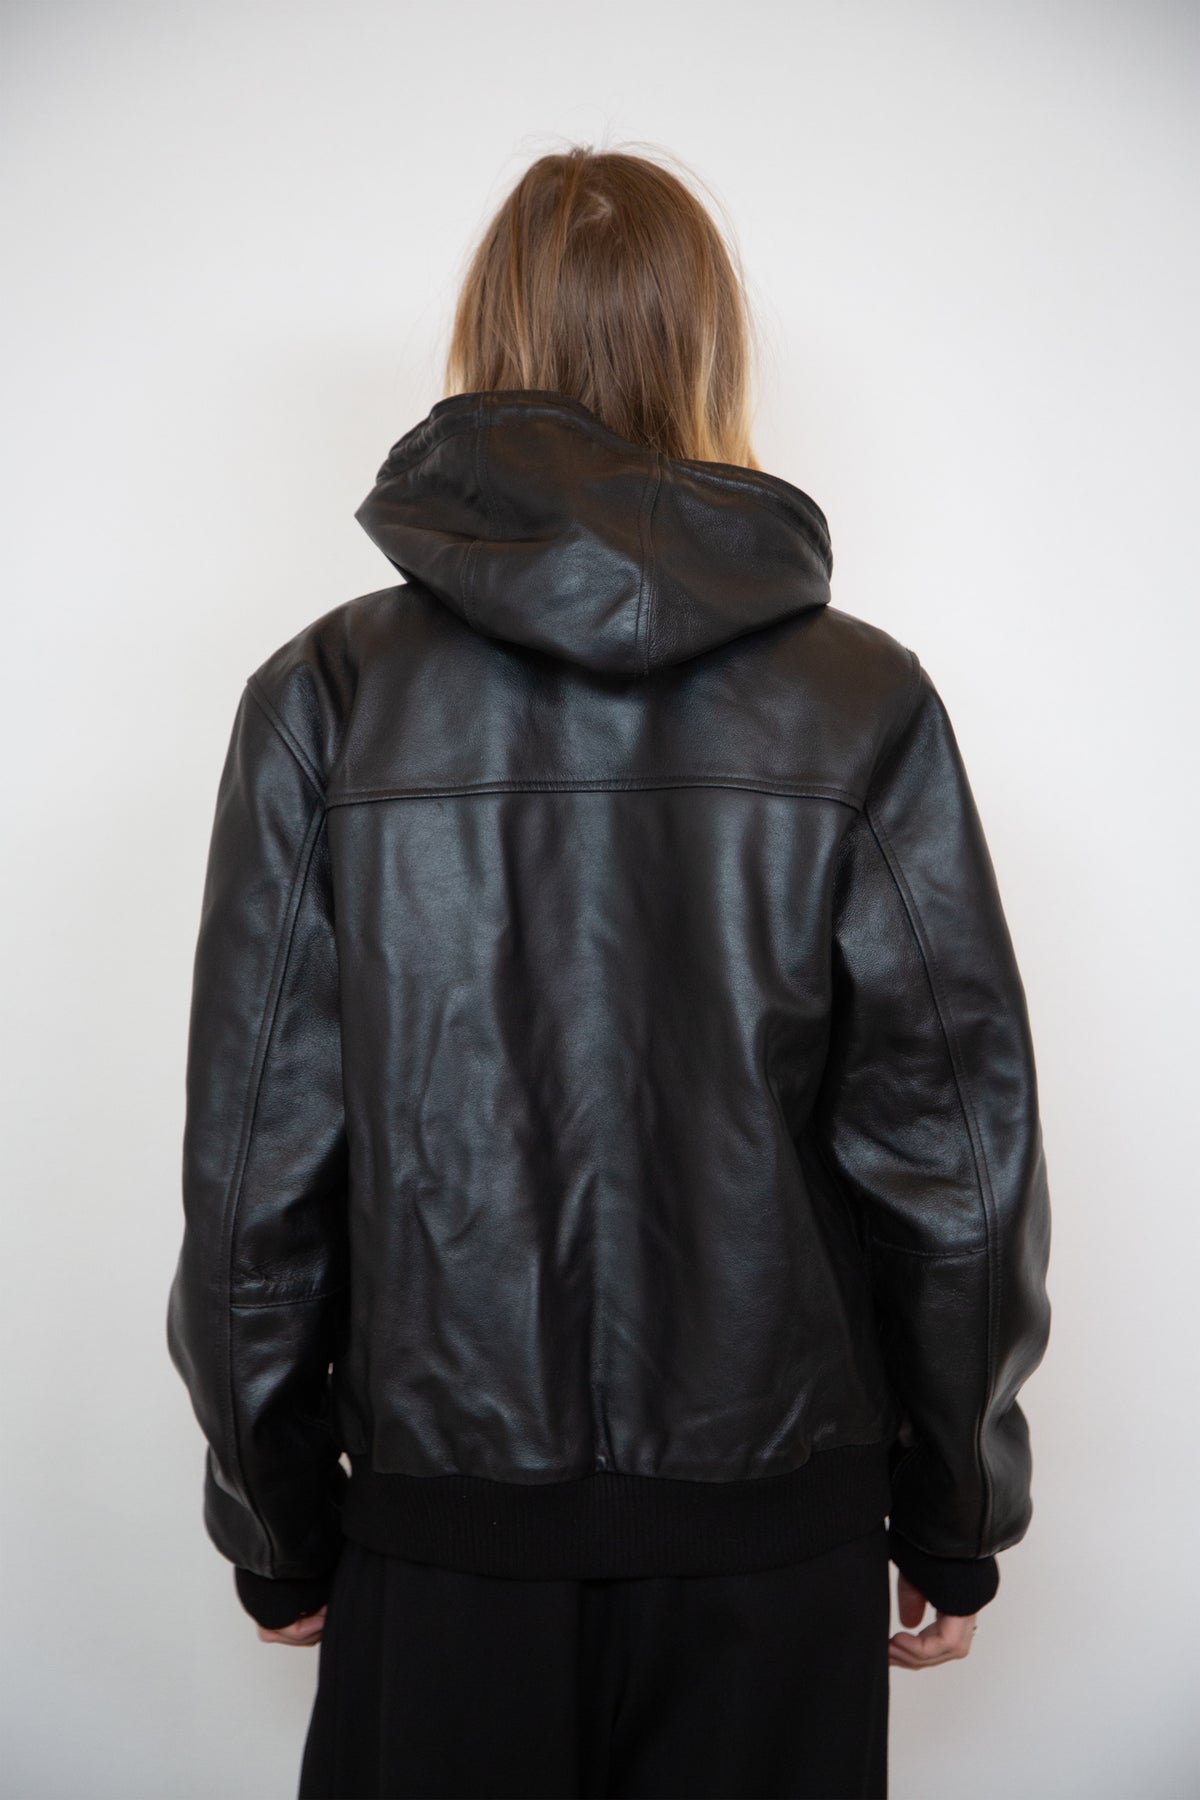 Carhartt leather jacket